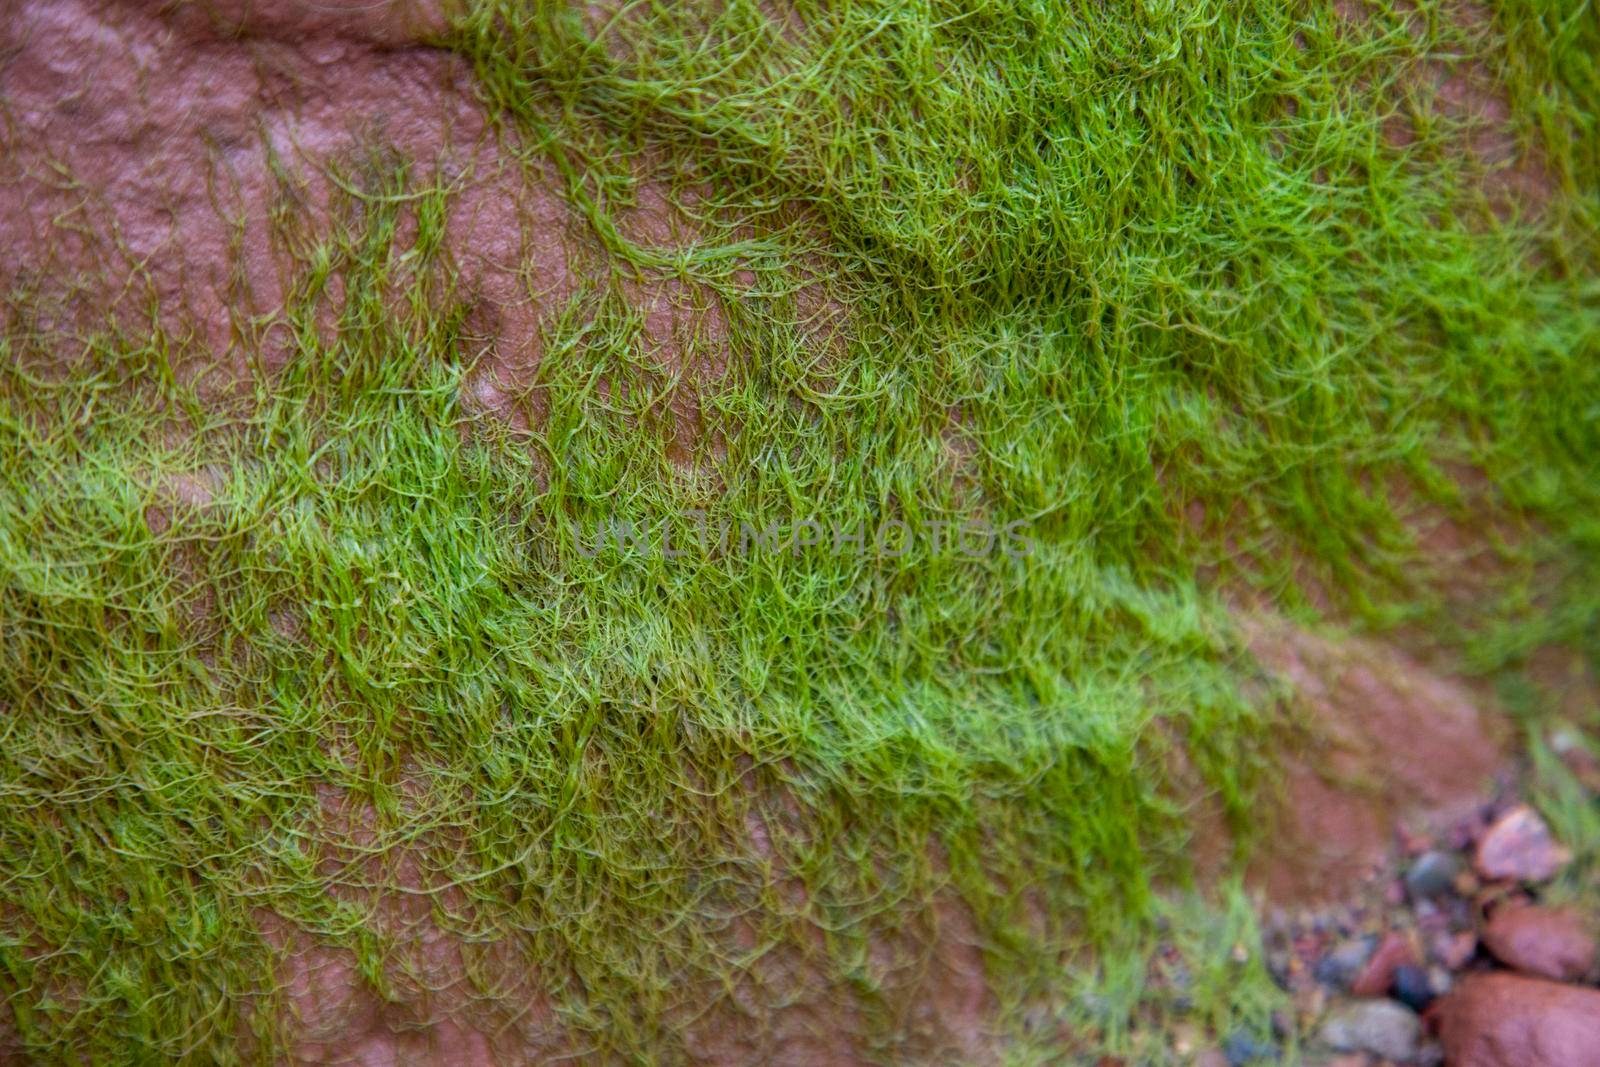 biological green algae on the side of a cliffside in canada 